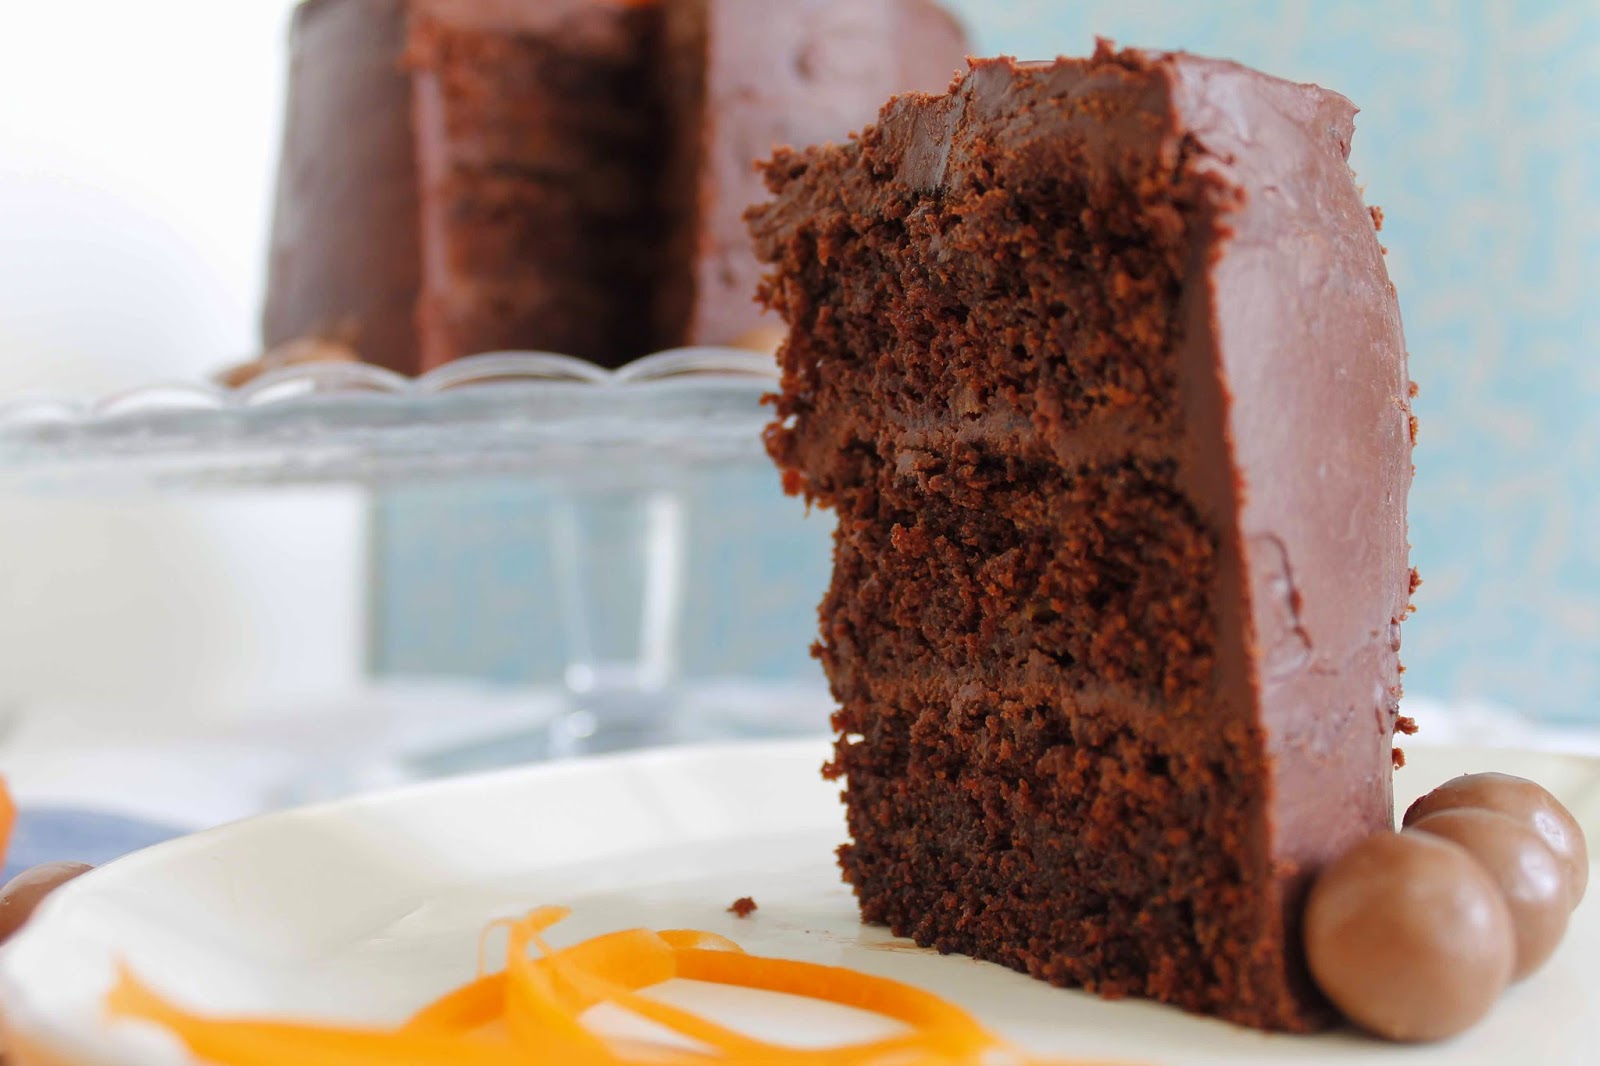 Chocolate zucchini carrot layer cake o Layer cake de chocolate, calabacín y zanahoria